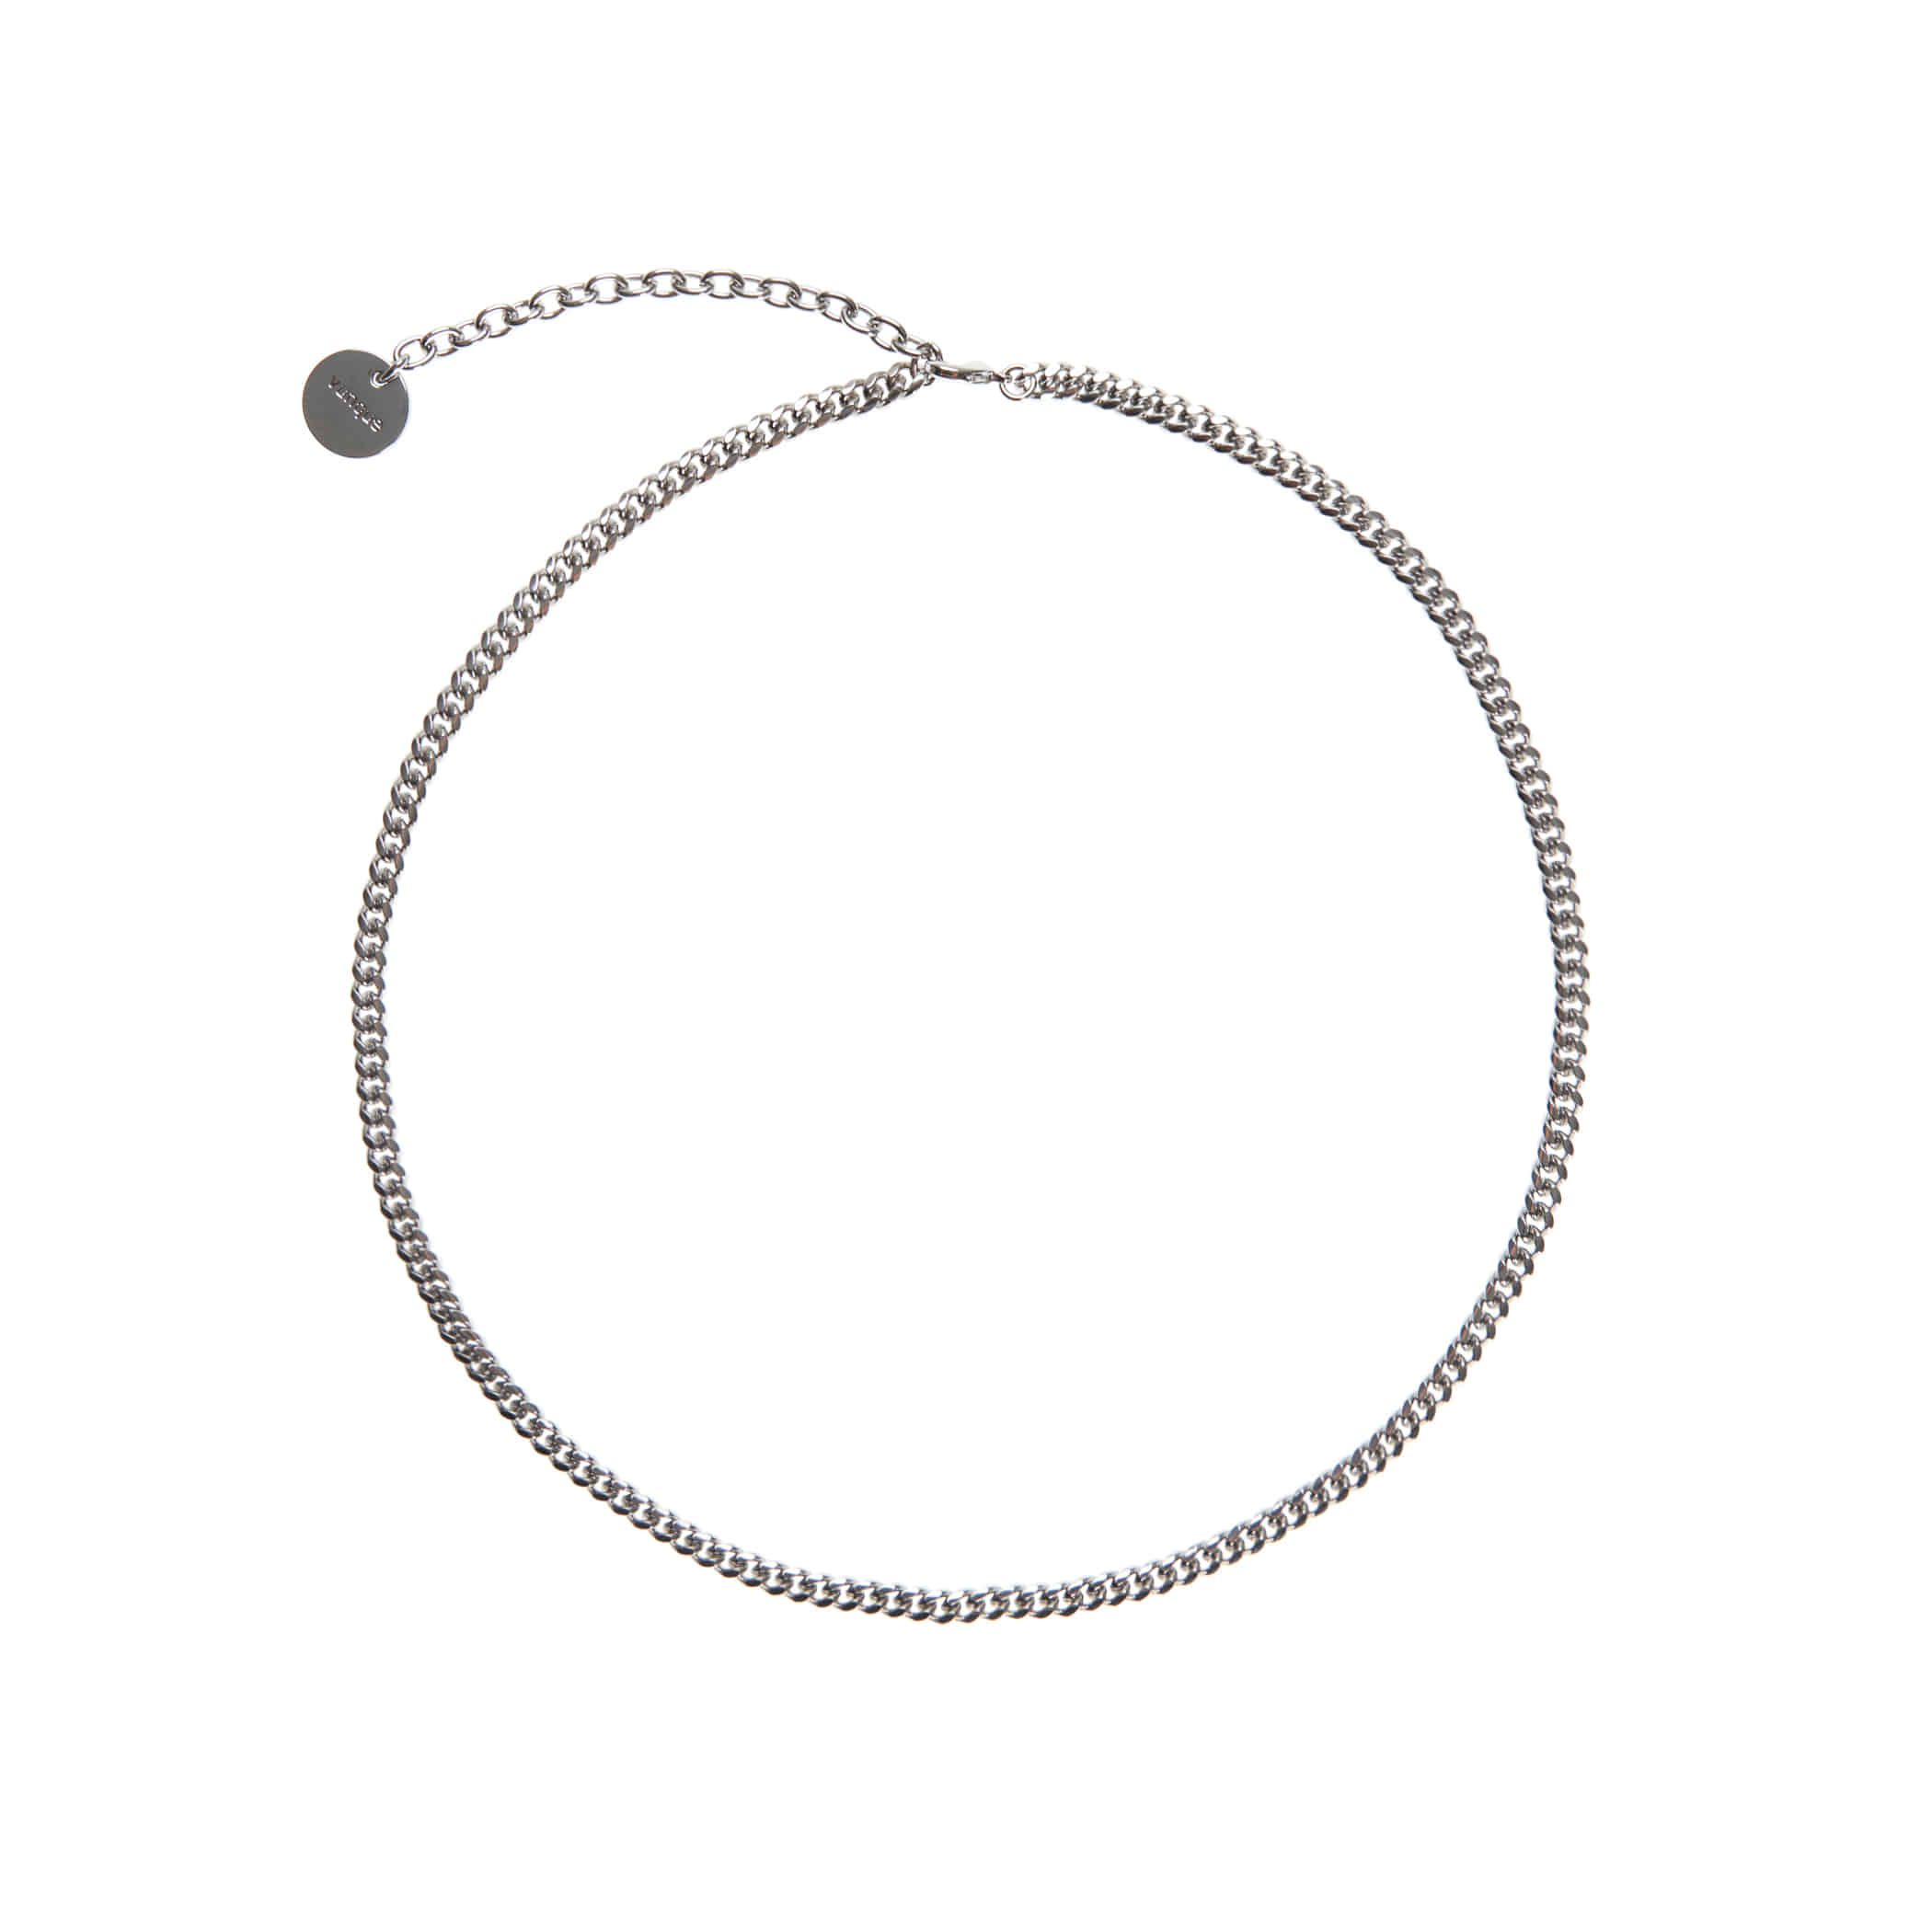 Mercury Chain Necklace (머큐리 체인 넥클레스) Silver